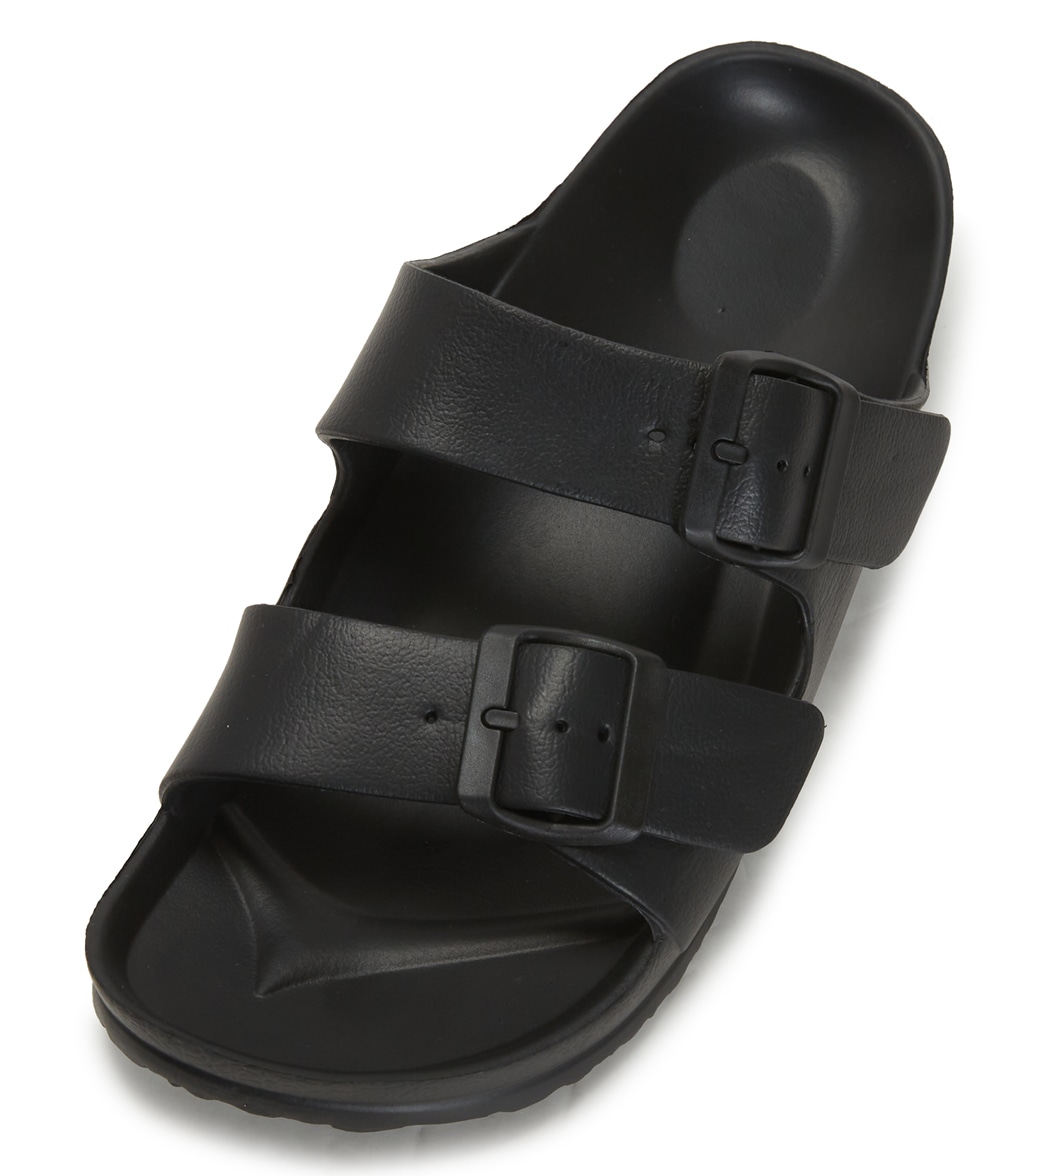 Northside Women's Tate Slip On Shoes Shoes Sandals - Black 060 - Swimoutlet.com